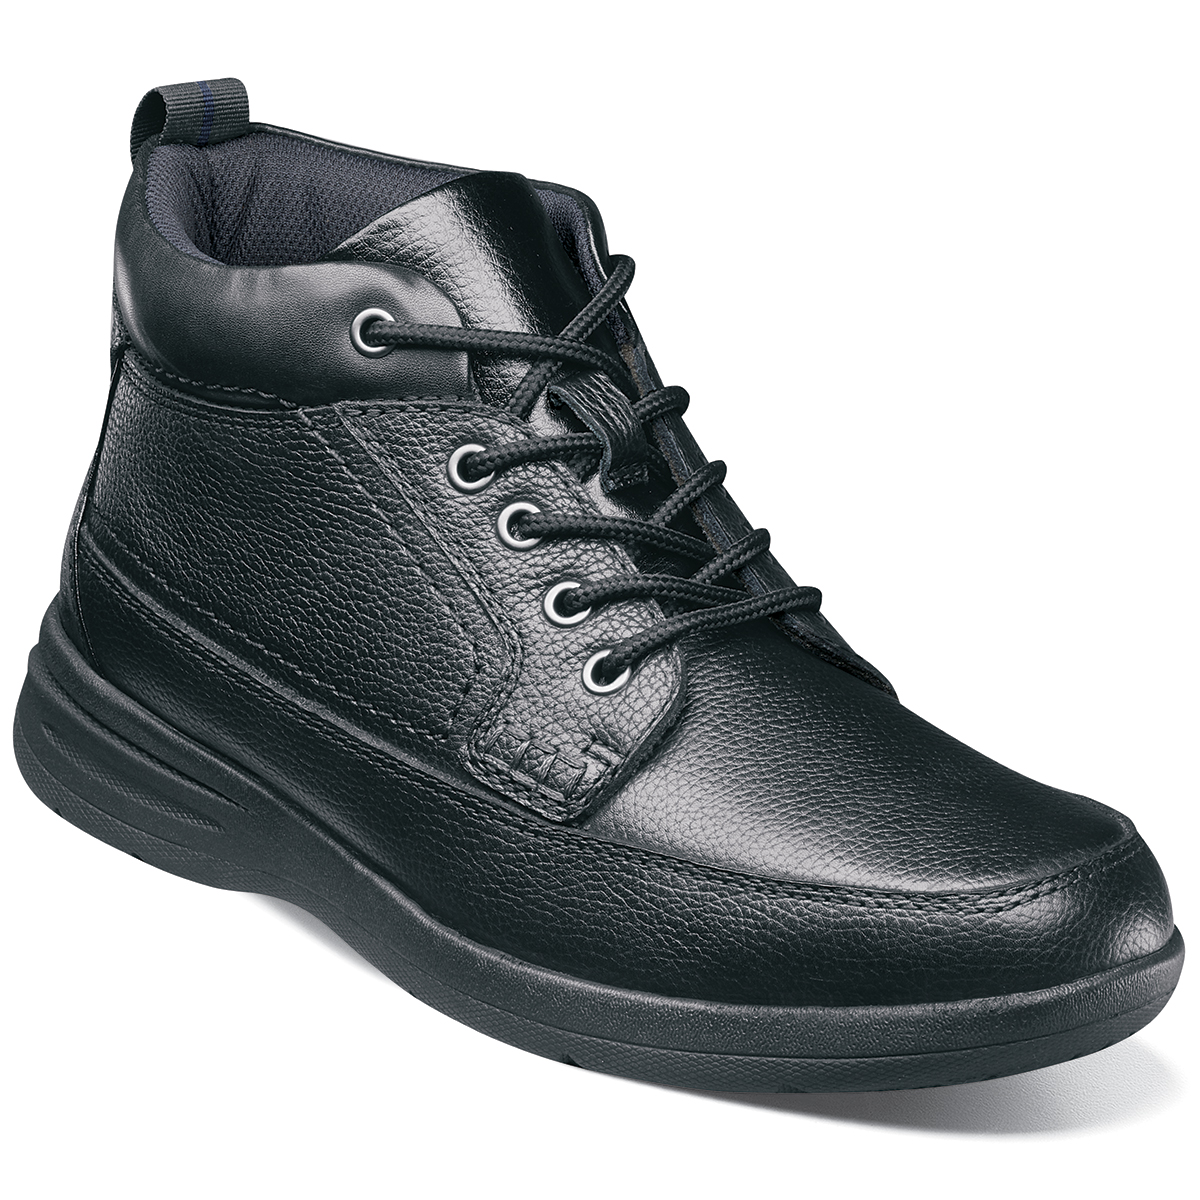 Nunn Bush Men's Cam Moc Toe Boot, Wide - Black, 8.5